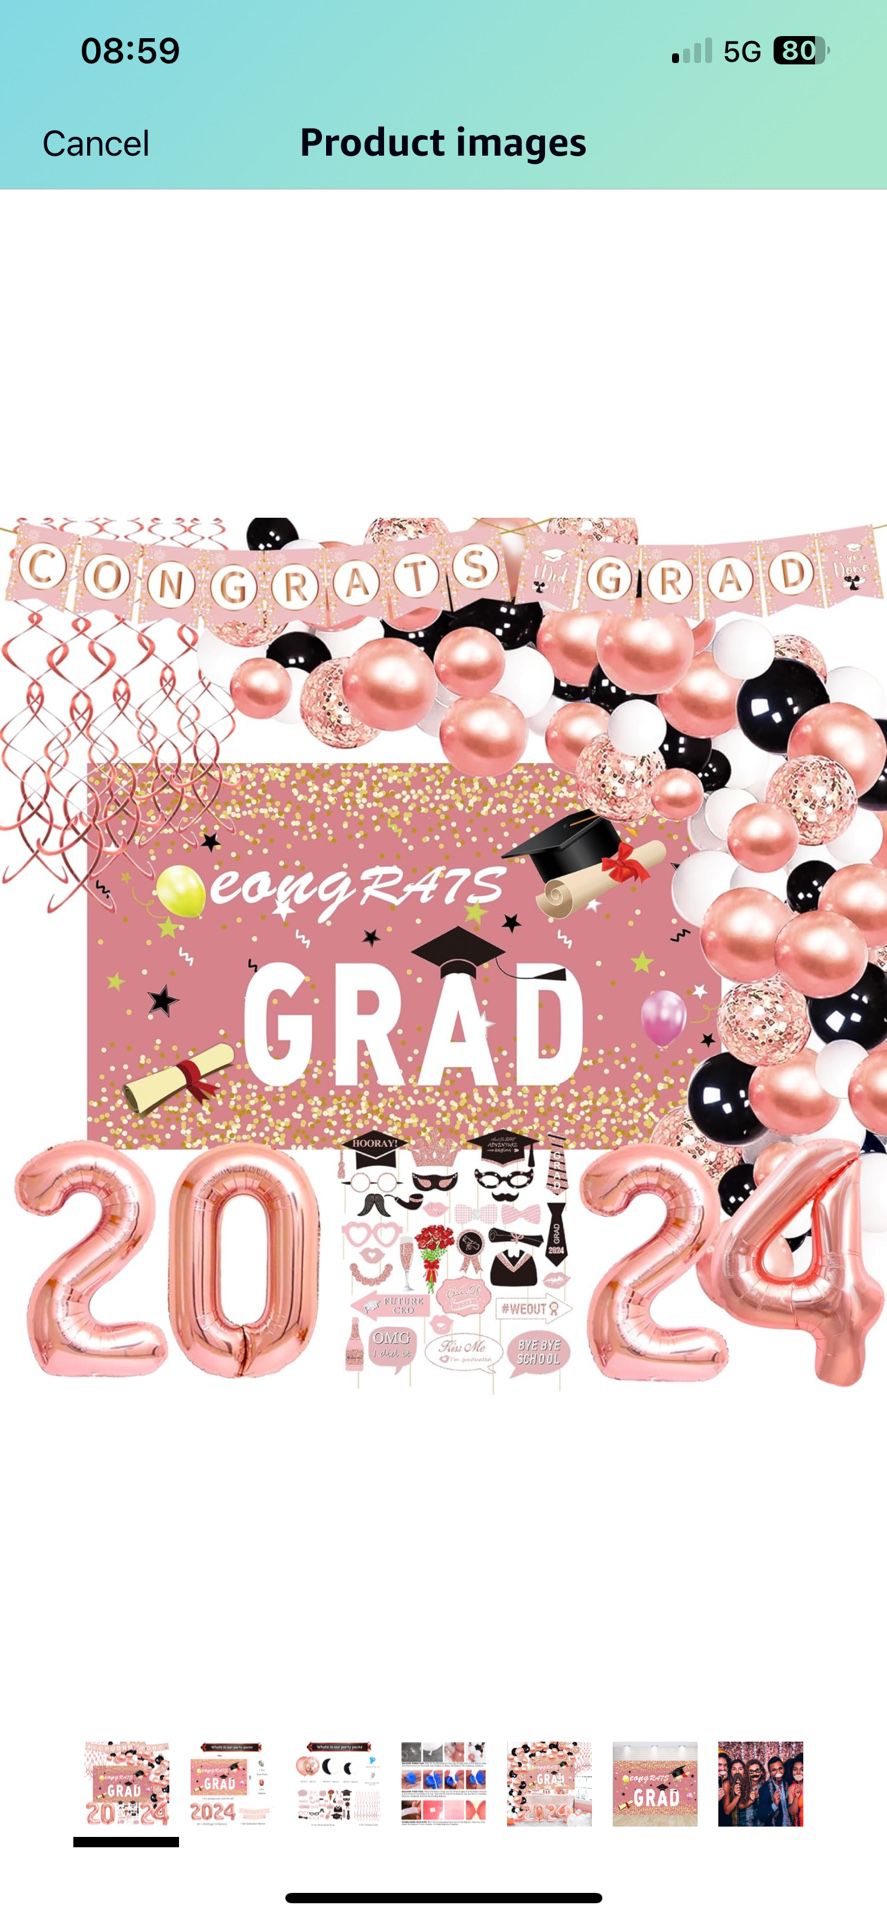 Graduation Decorations 2024 - Rose Gold Graduation Party Supplies Including Grad Banner, Graduation Backdrop, Hanging Swirls, Grad Balloons Garland Ki